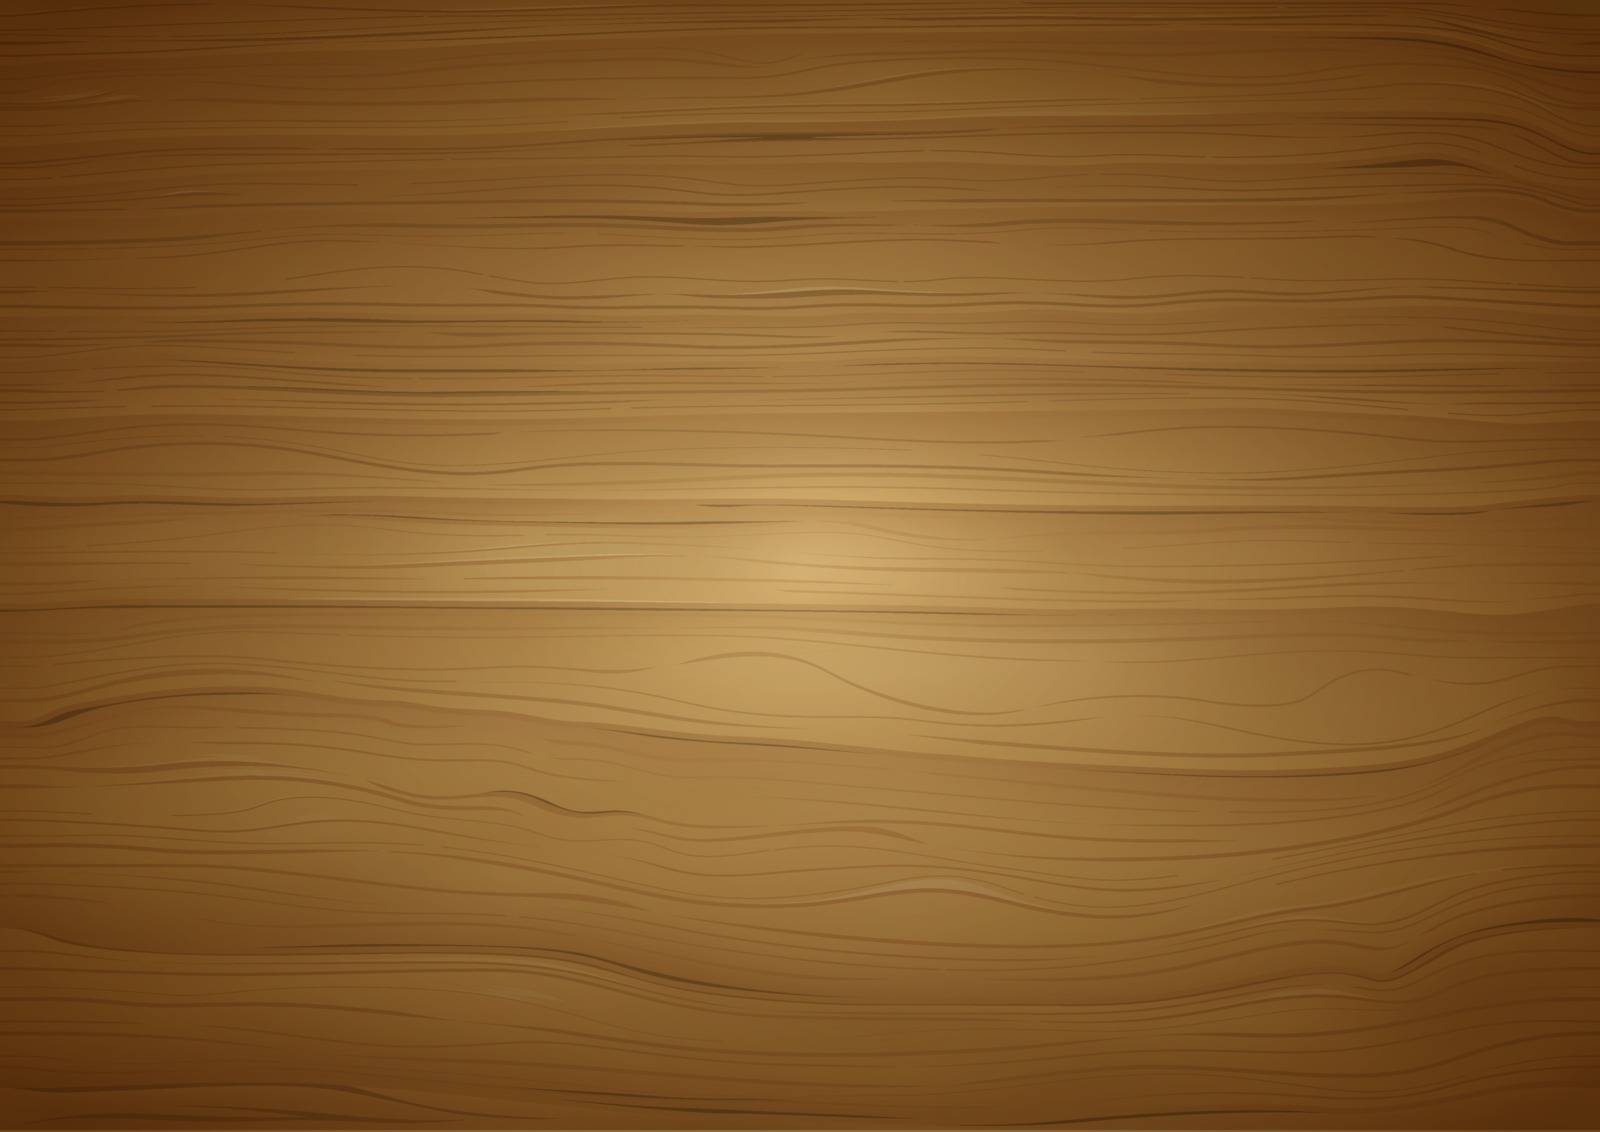 Wooden Texture - Background Illustration, Vector